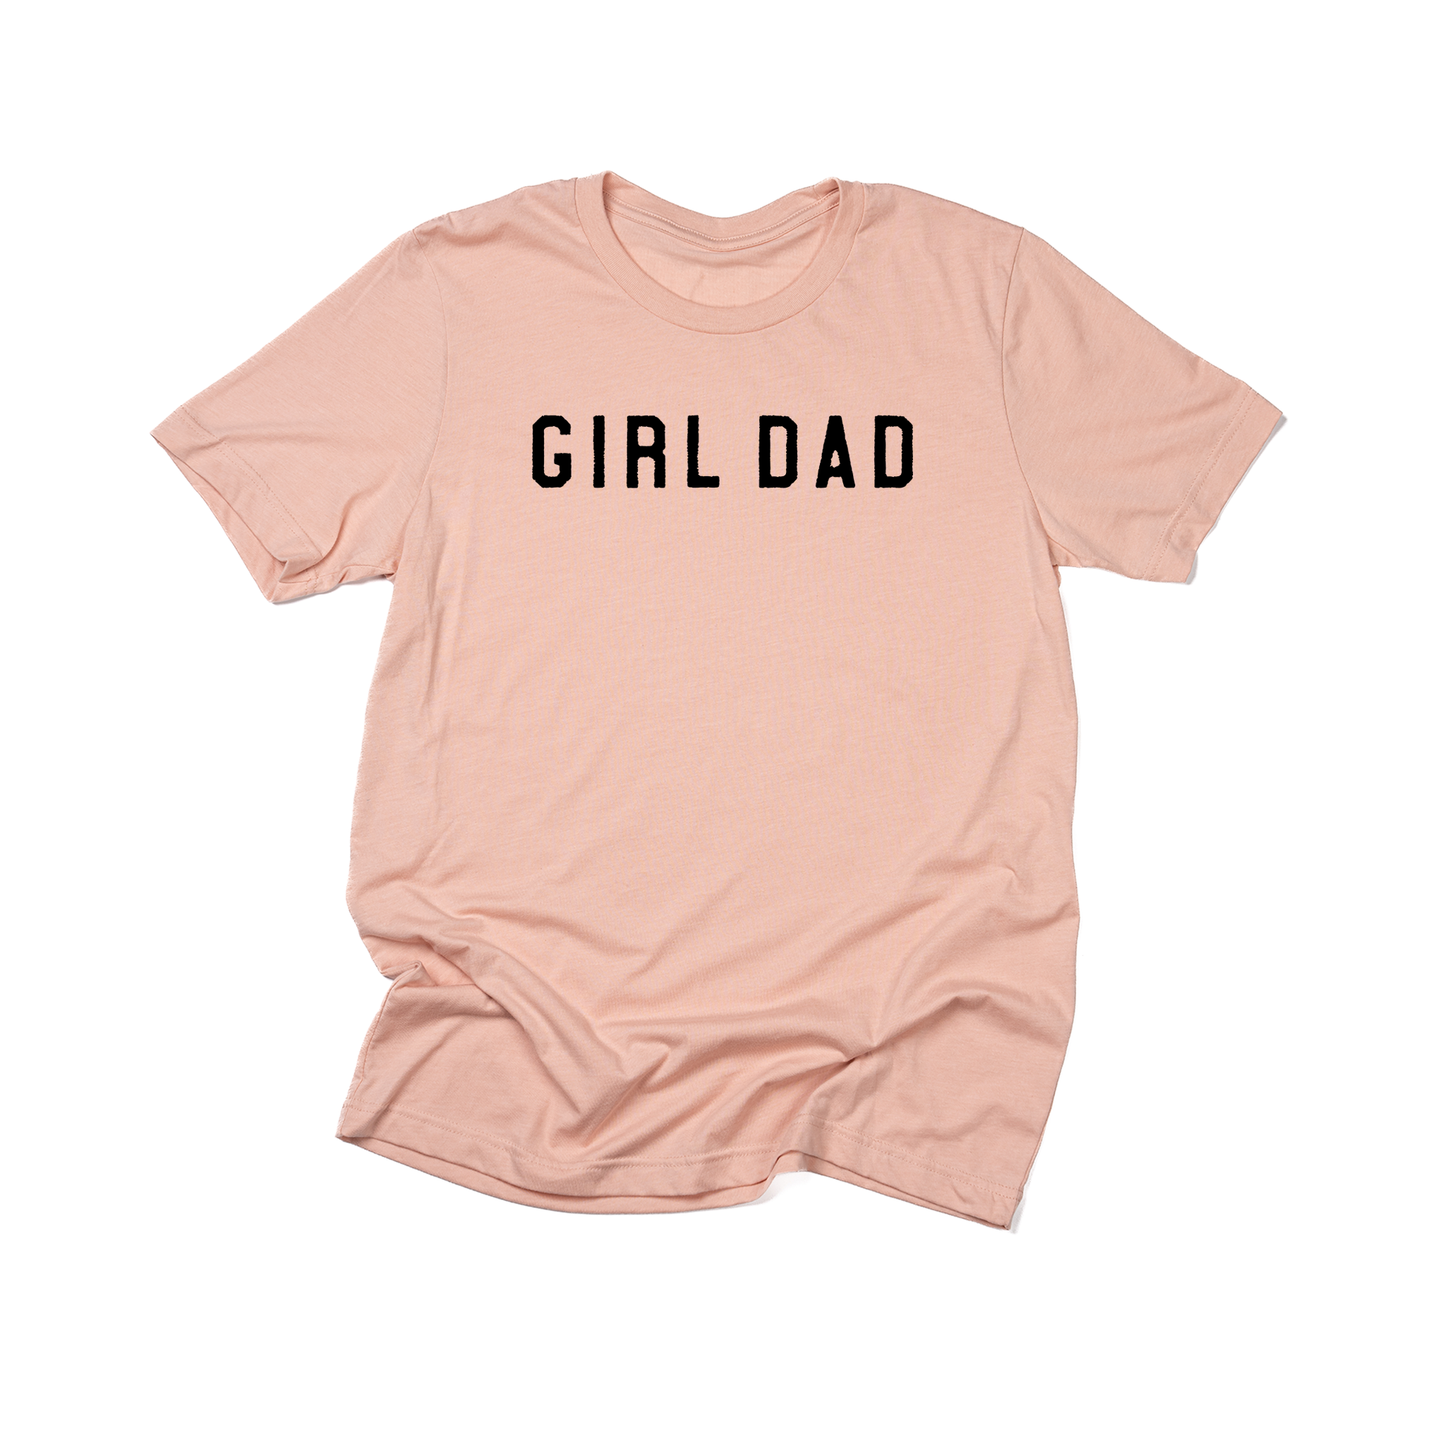 Girl Dad® (Across Front, Black) - Tee (Peach)